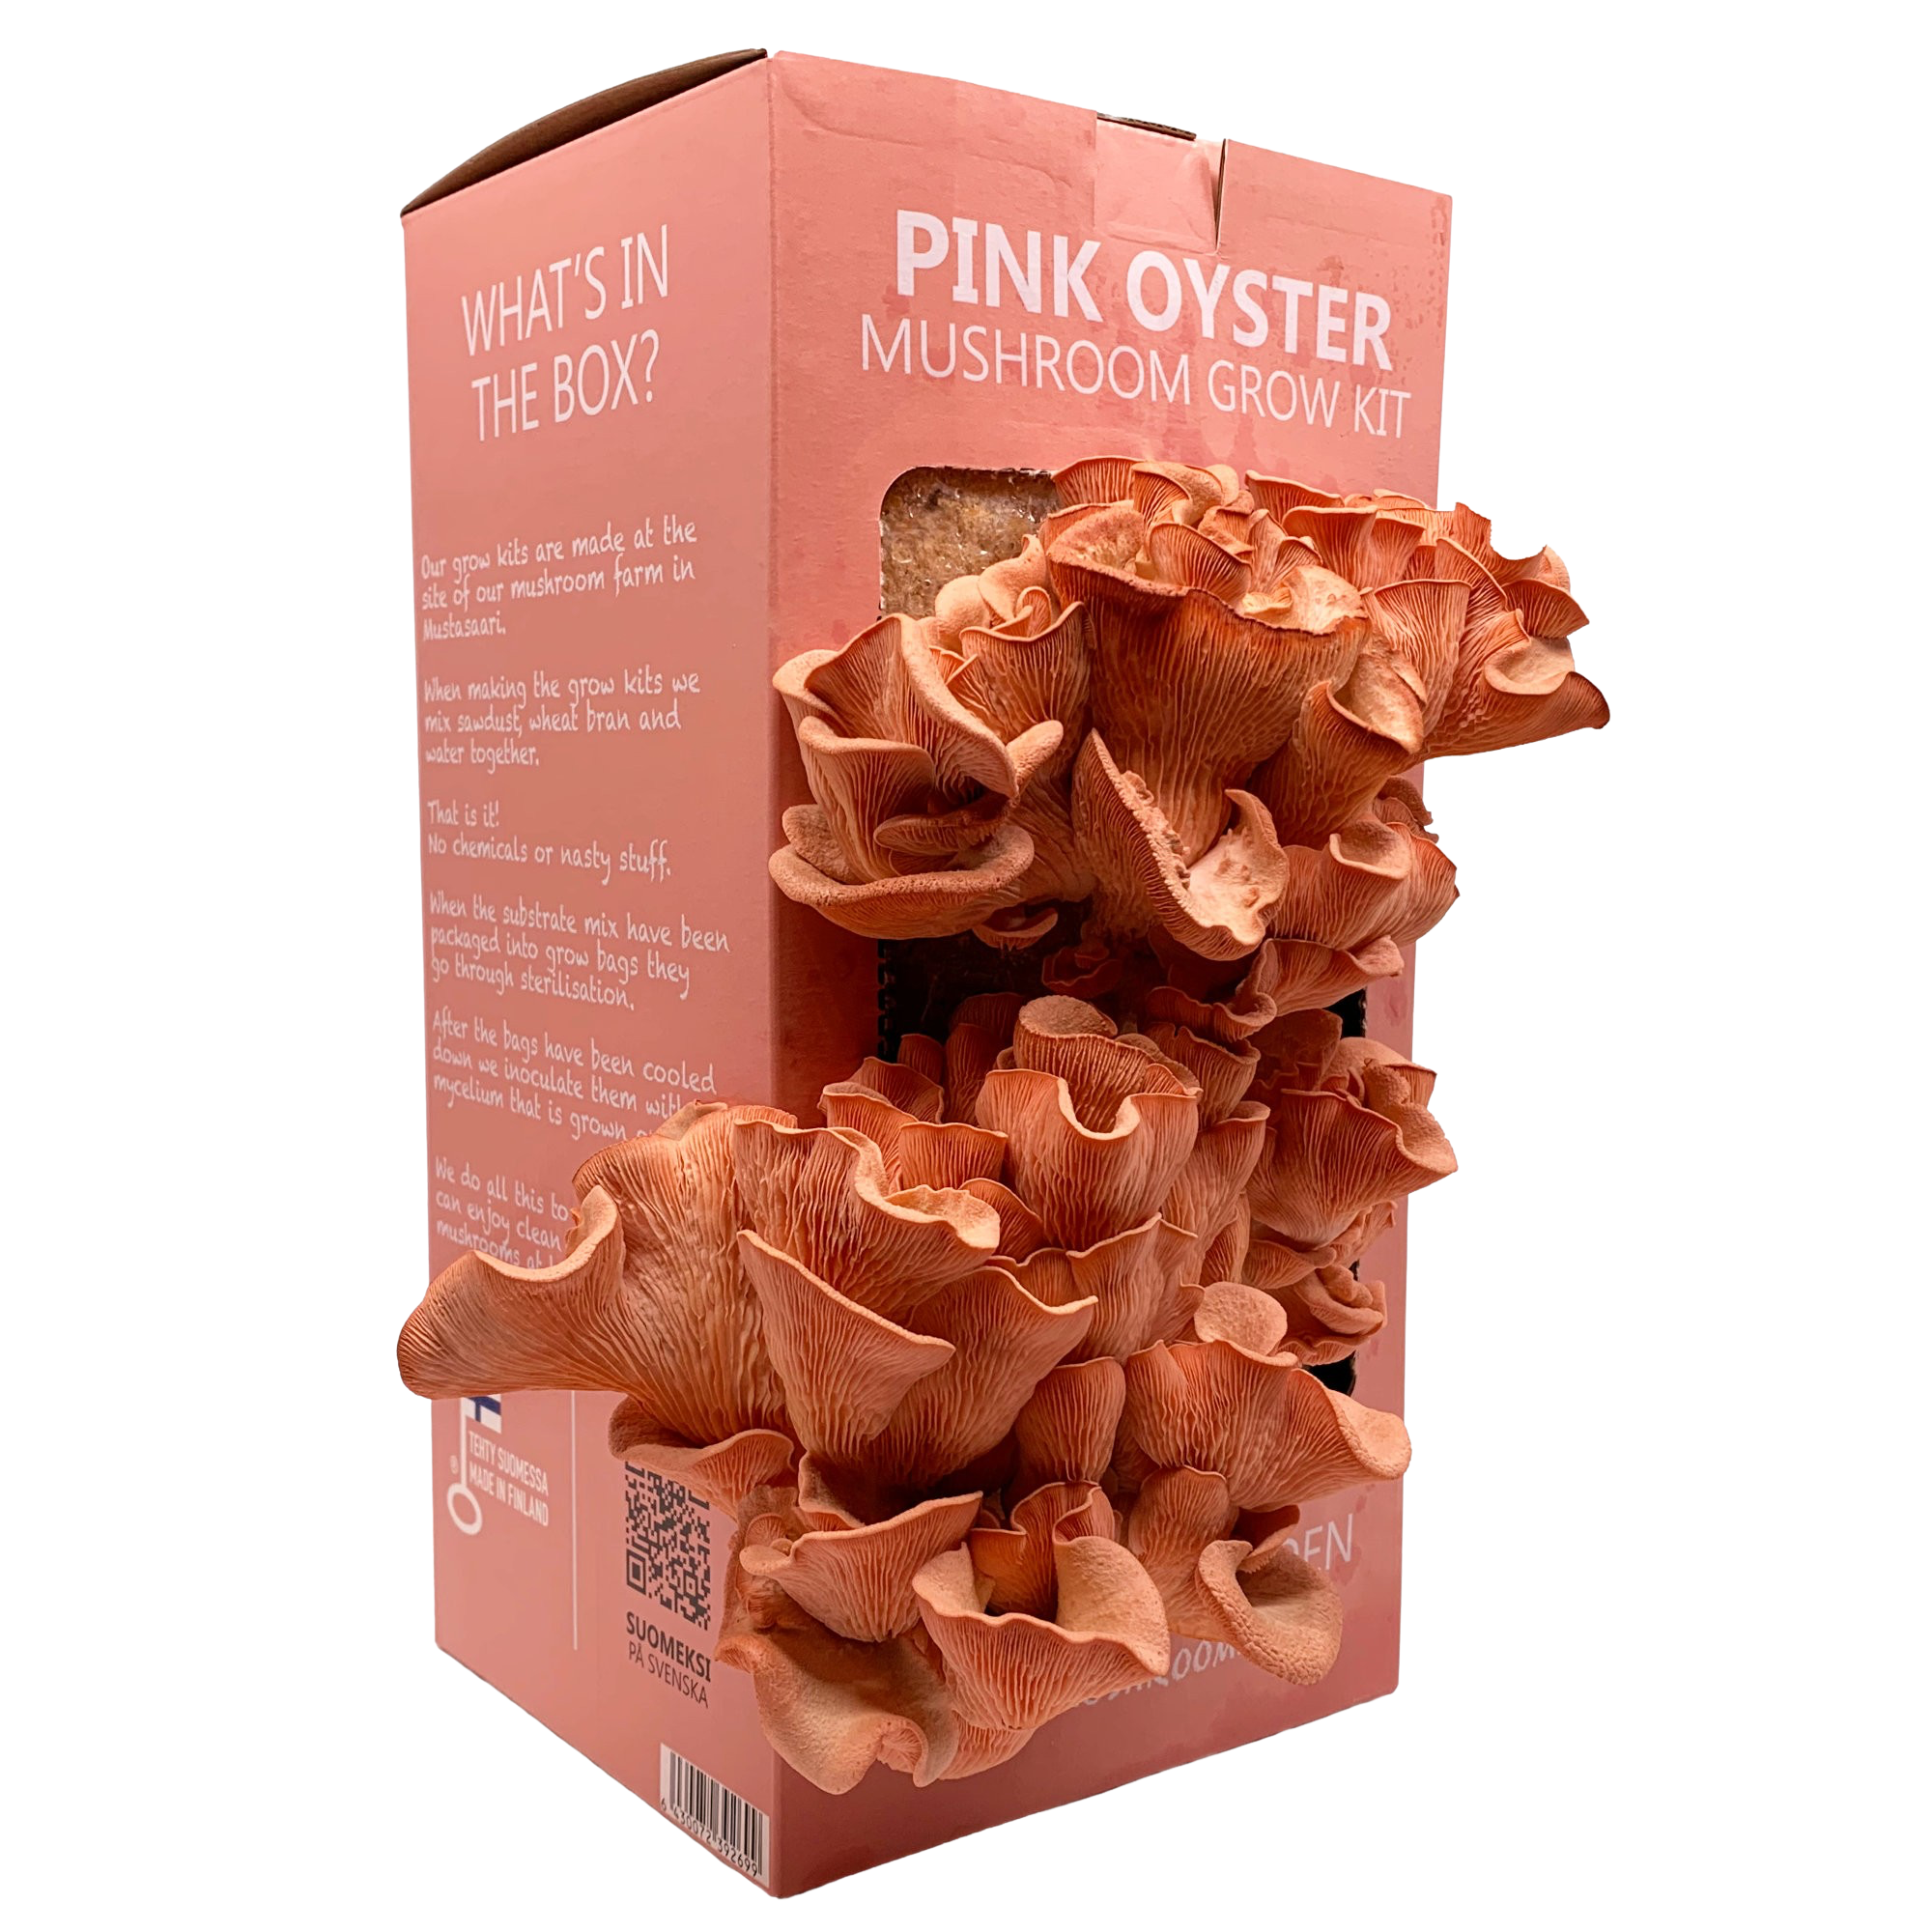 Pink oyster growkit